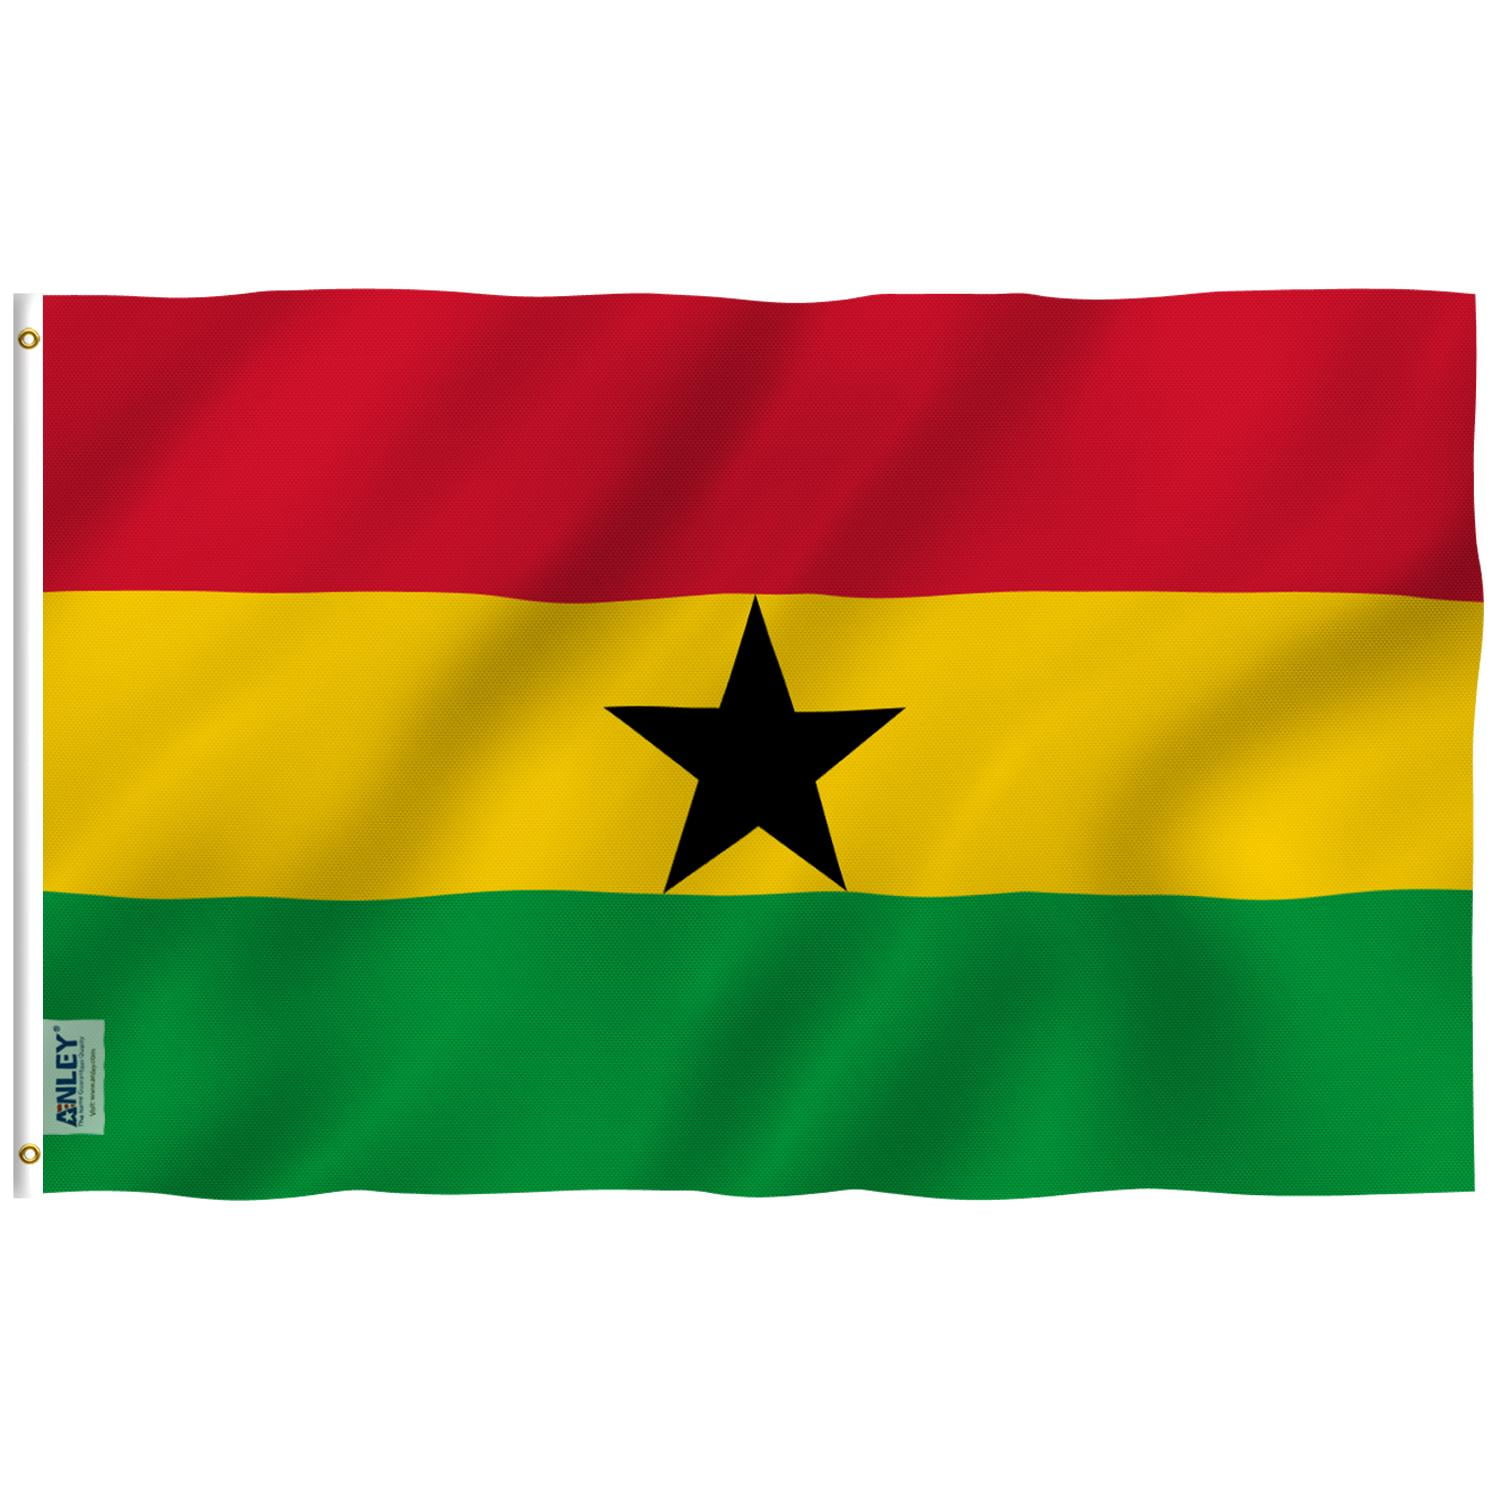 LARGE NEW 5 x 3 FT NIGERIA FLAG 